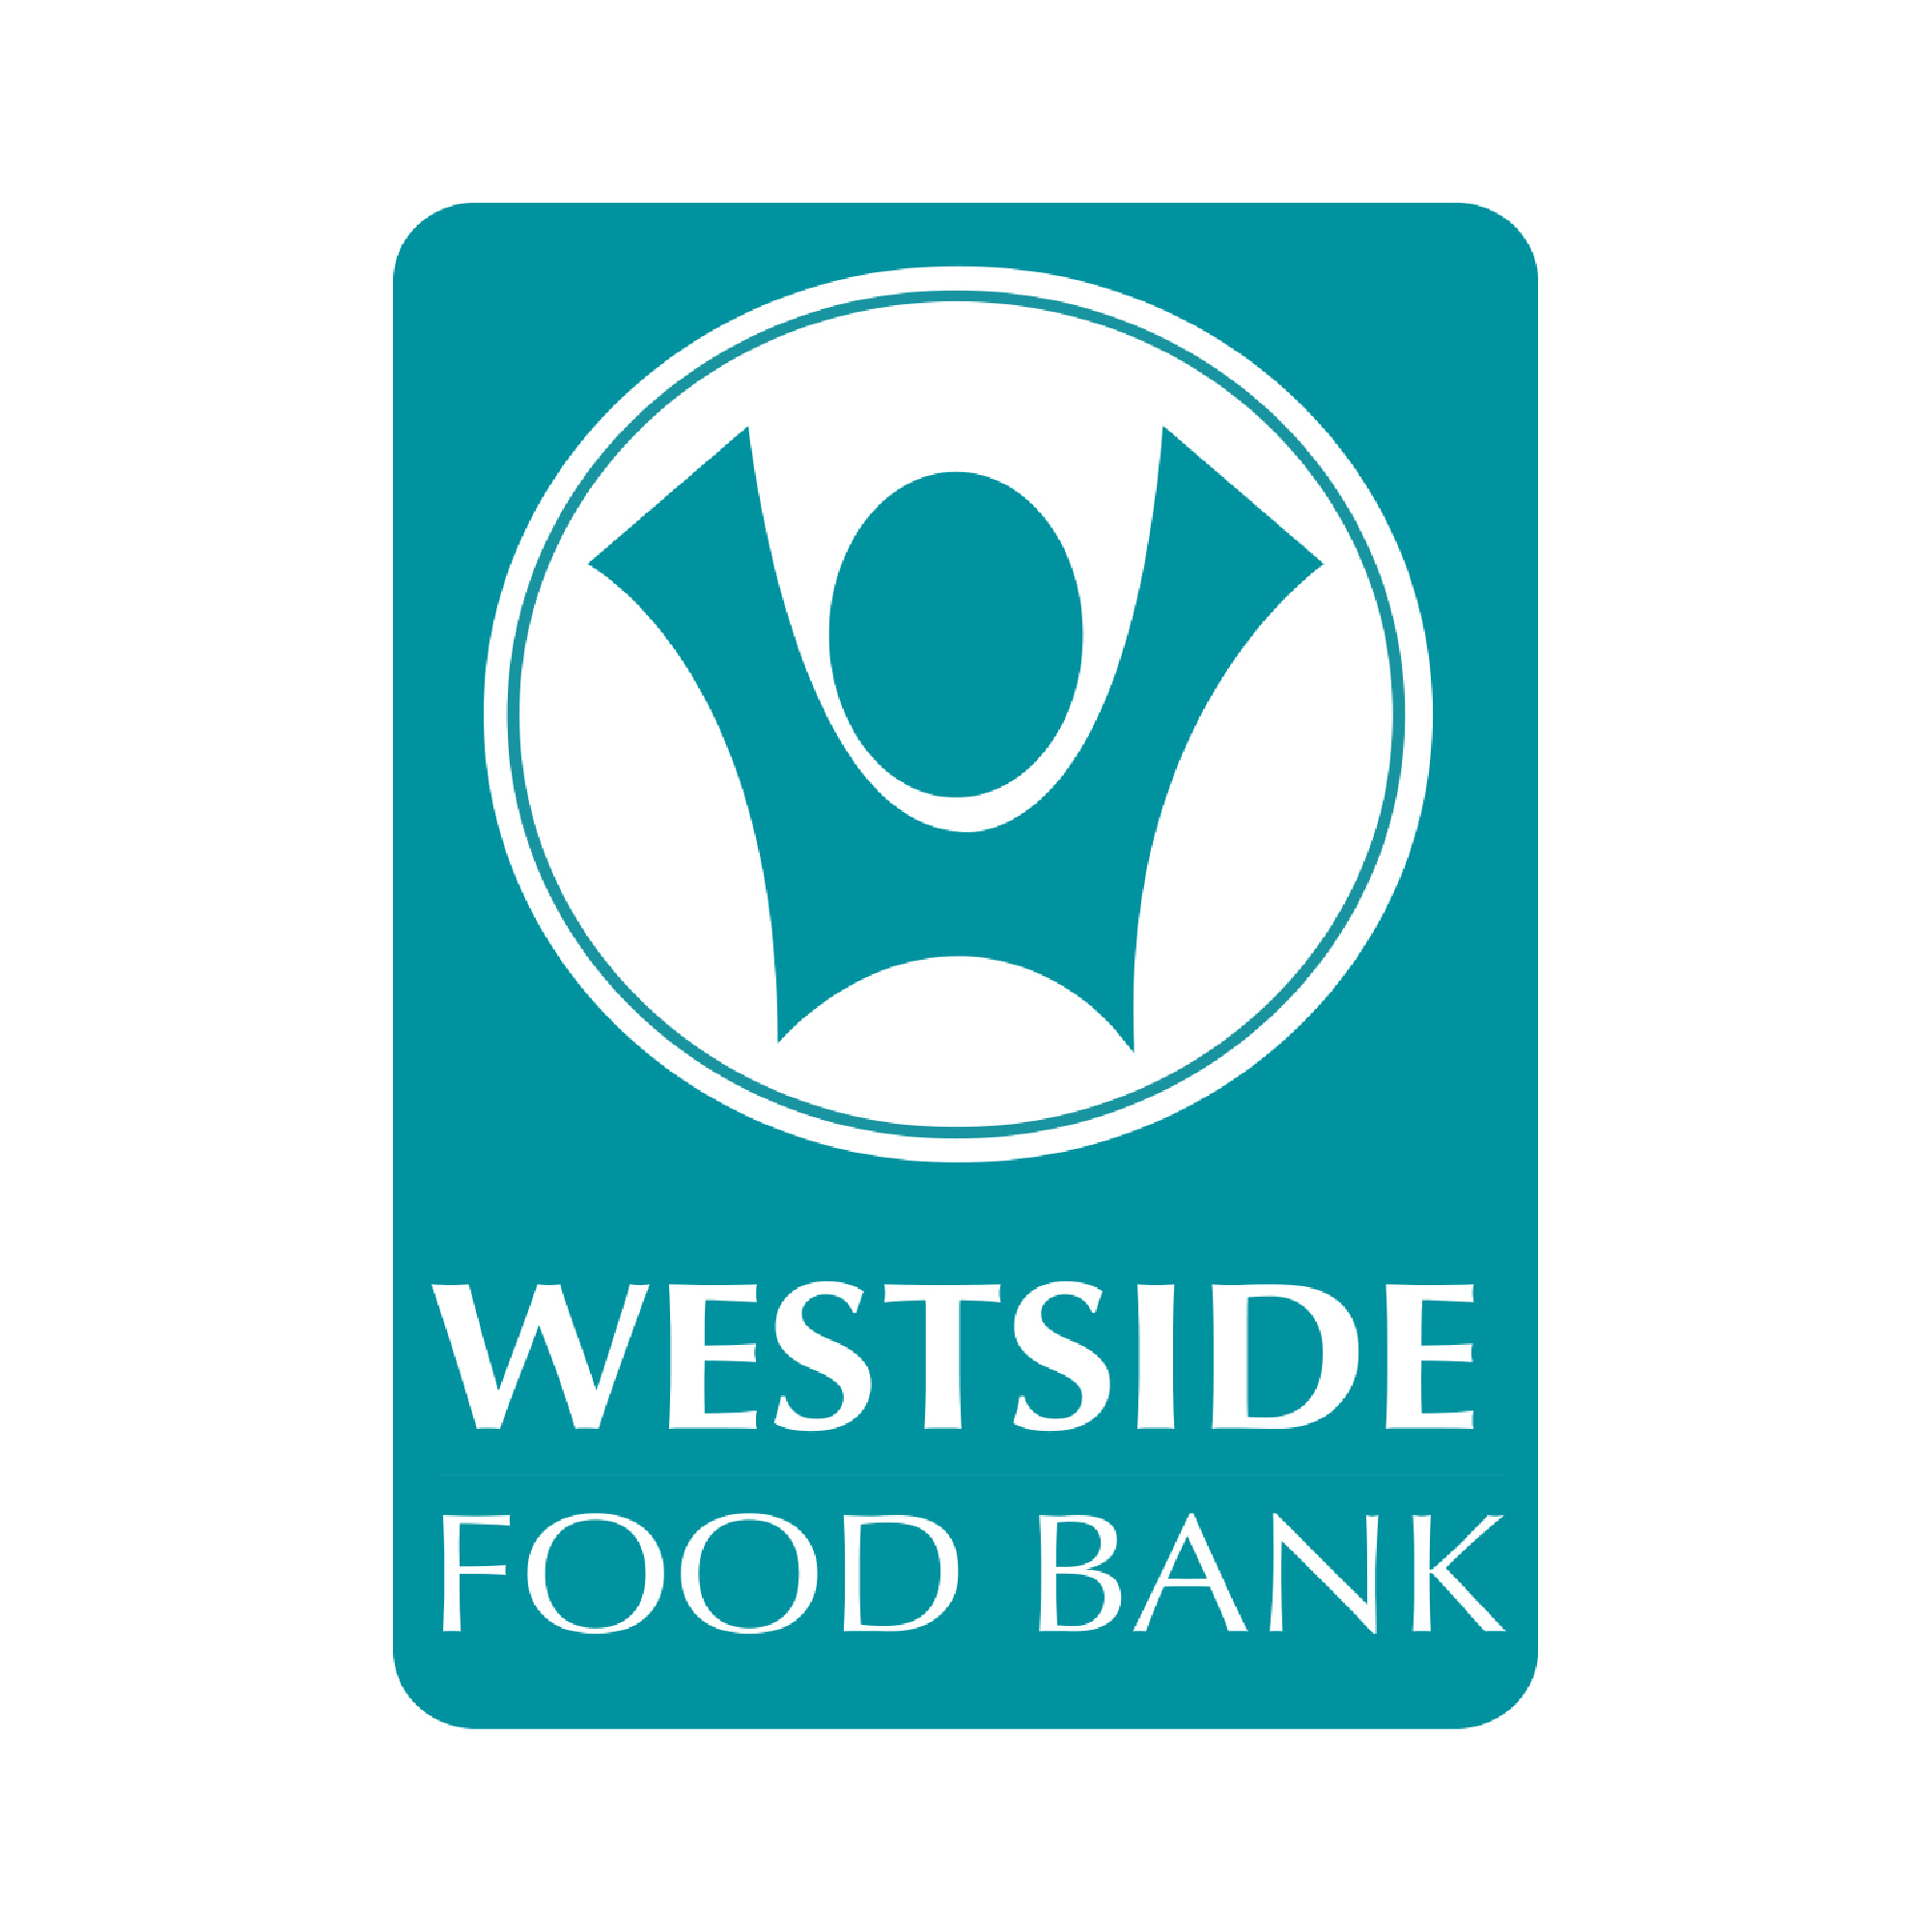 Westside Food Bank